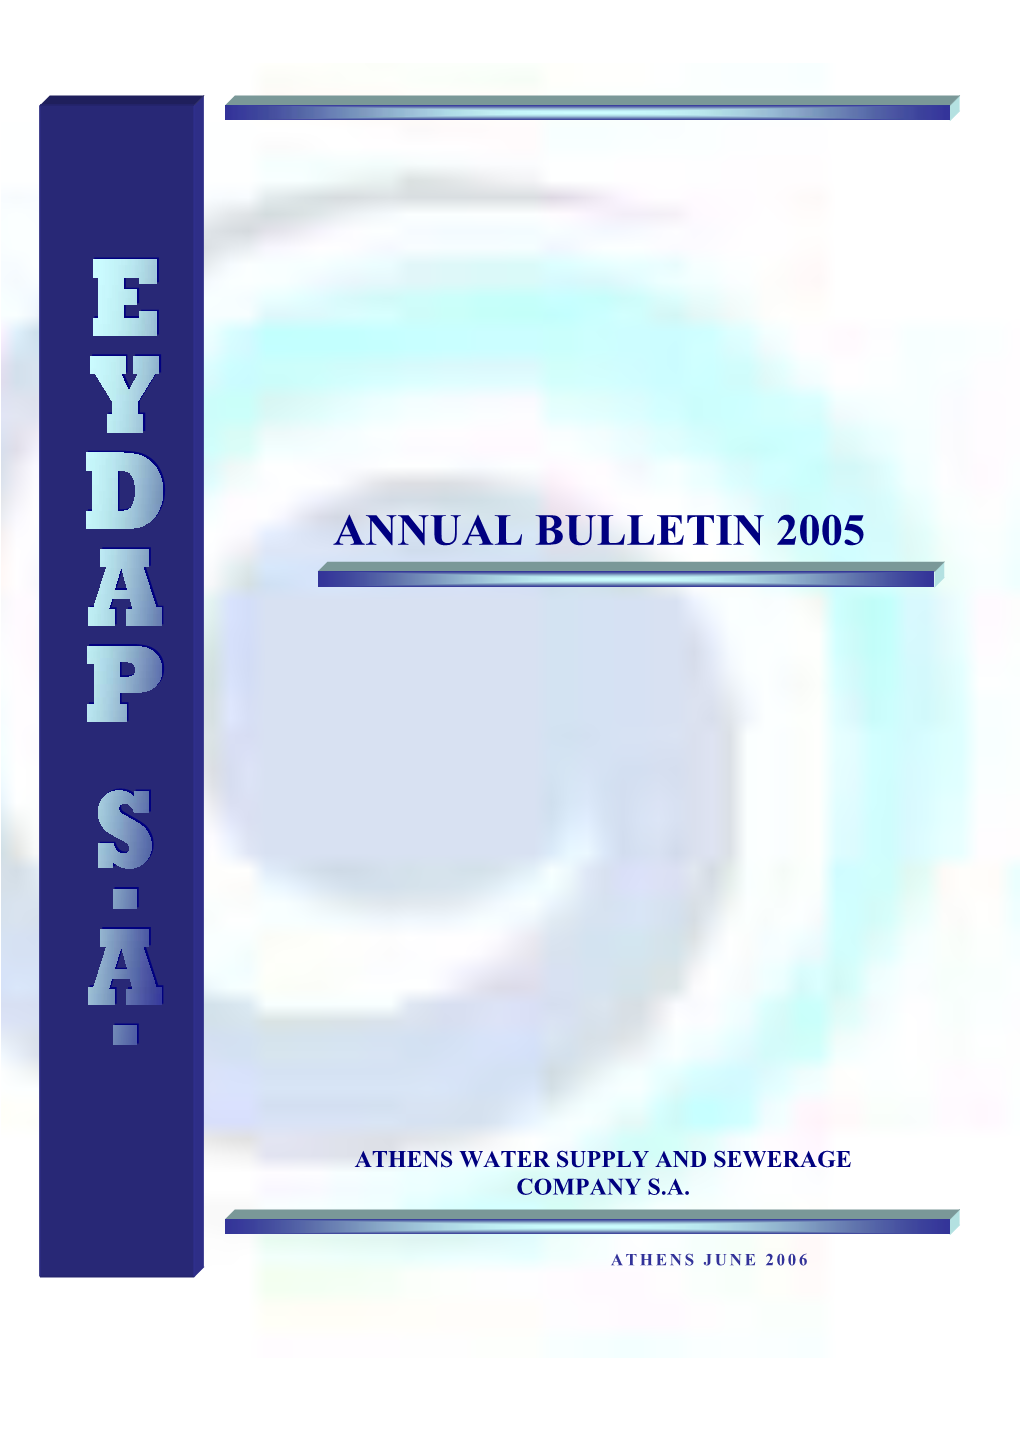 Annual Bulletin 2005